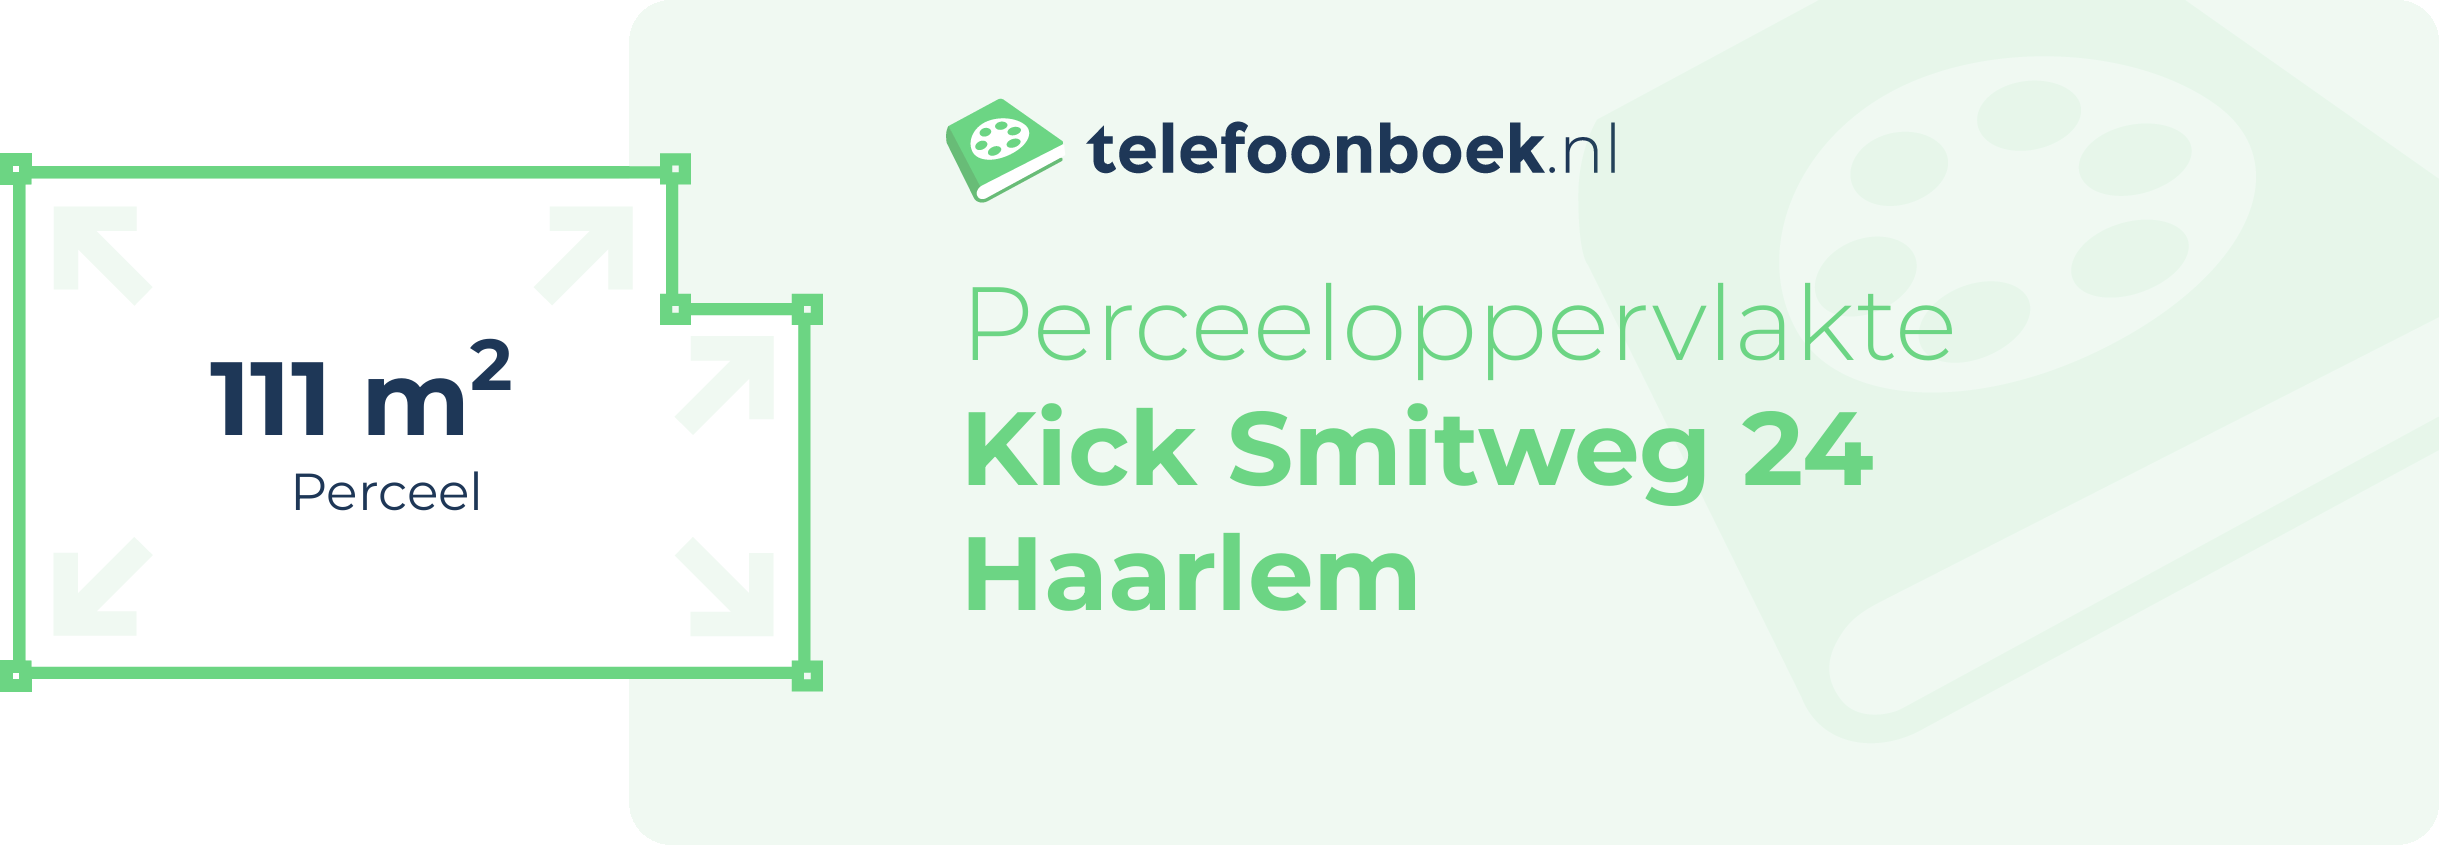 Perceeloppervlakte Kick Smitweg 24 Haarlem